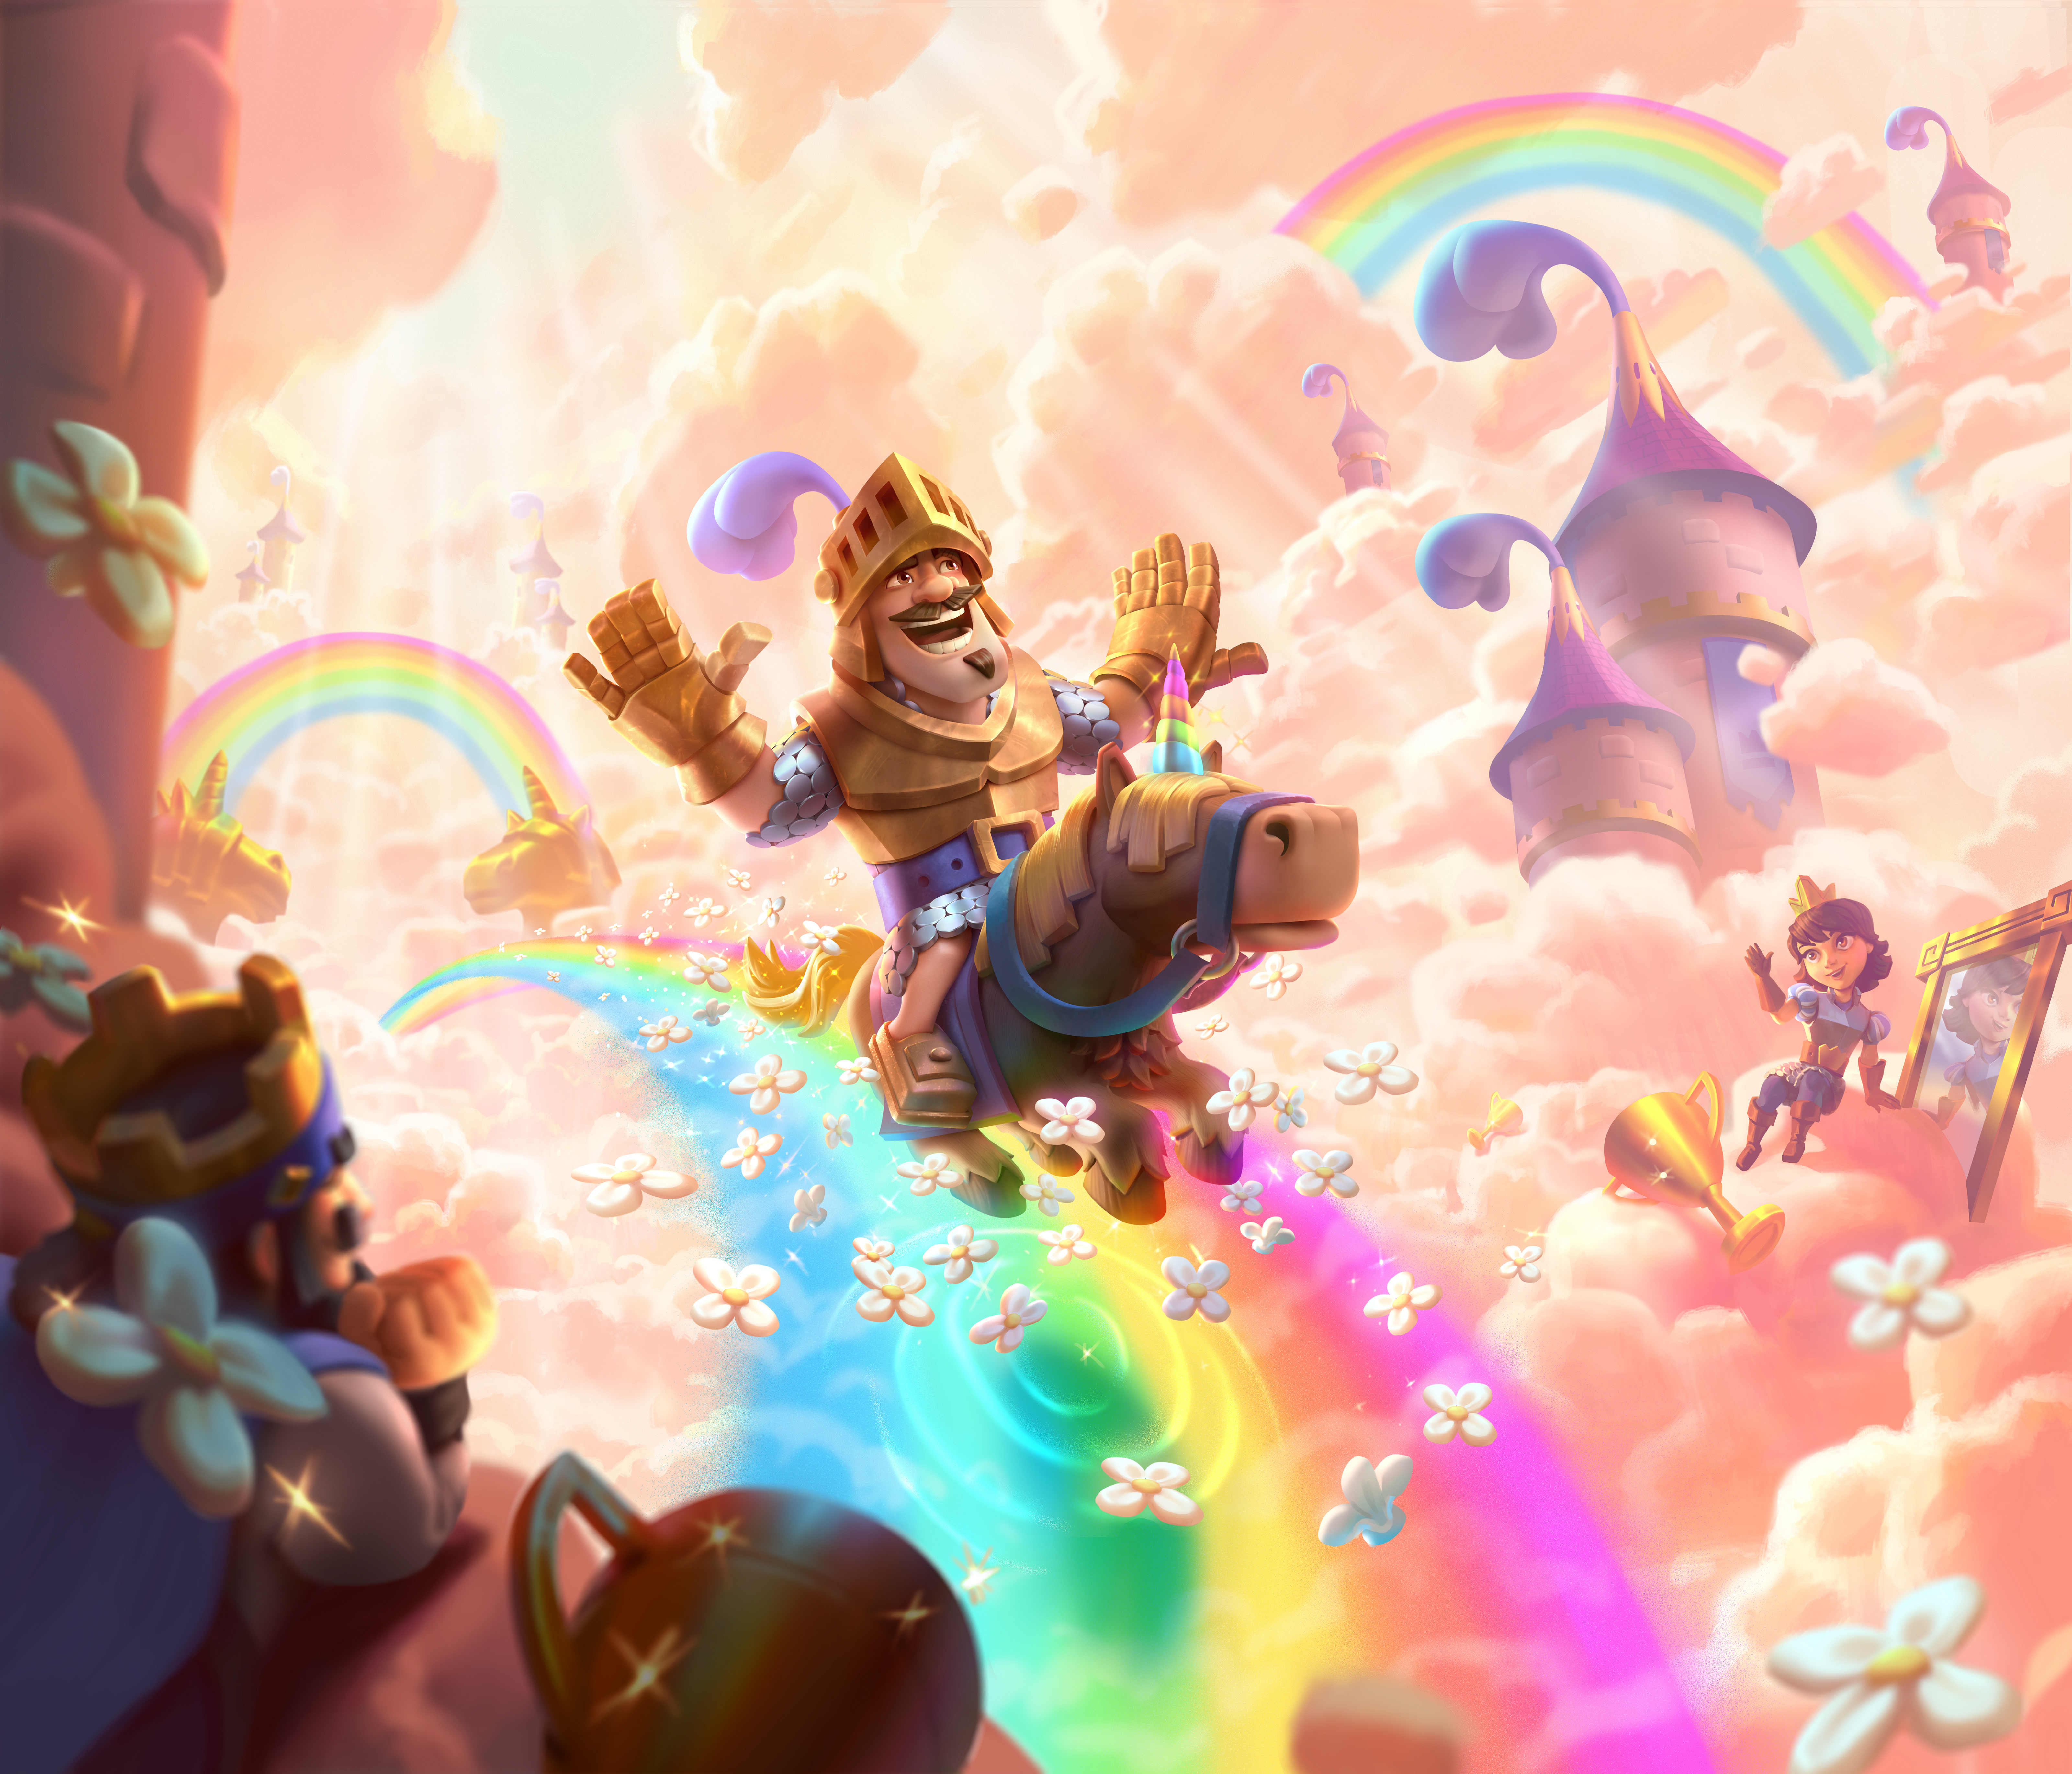 Clash Royale Video Game Art Rainbows Clouds Sun Rays Unicorn Horseman Knight Tower Video Game Charac 6400x5481